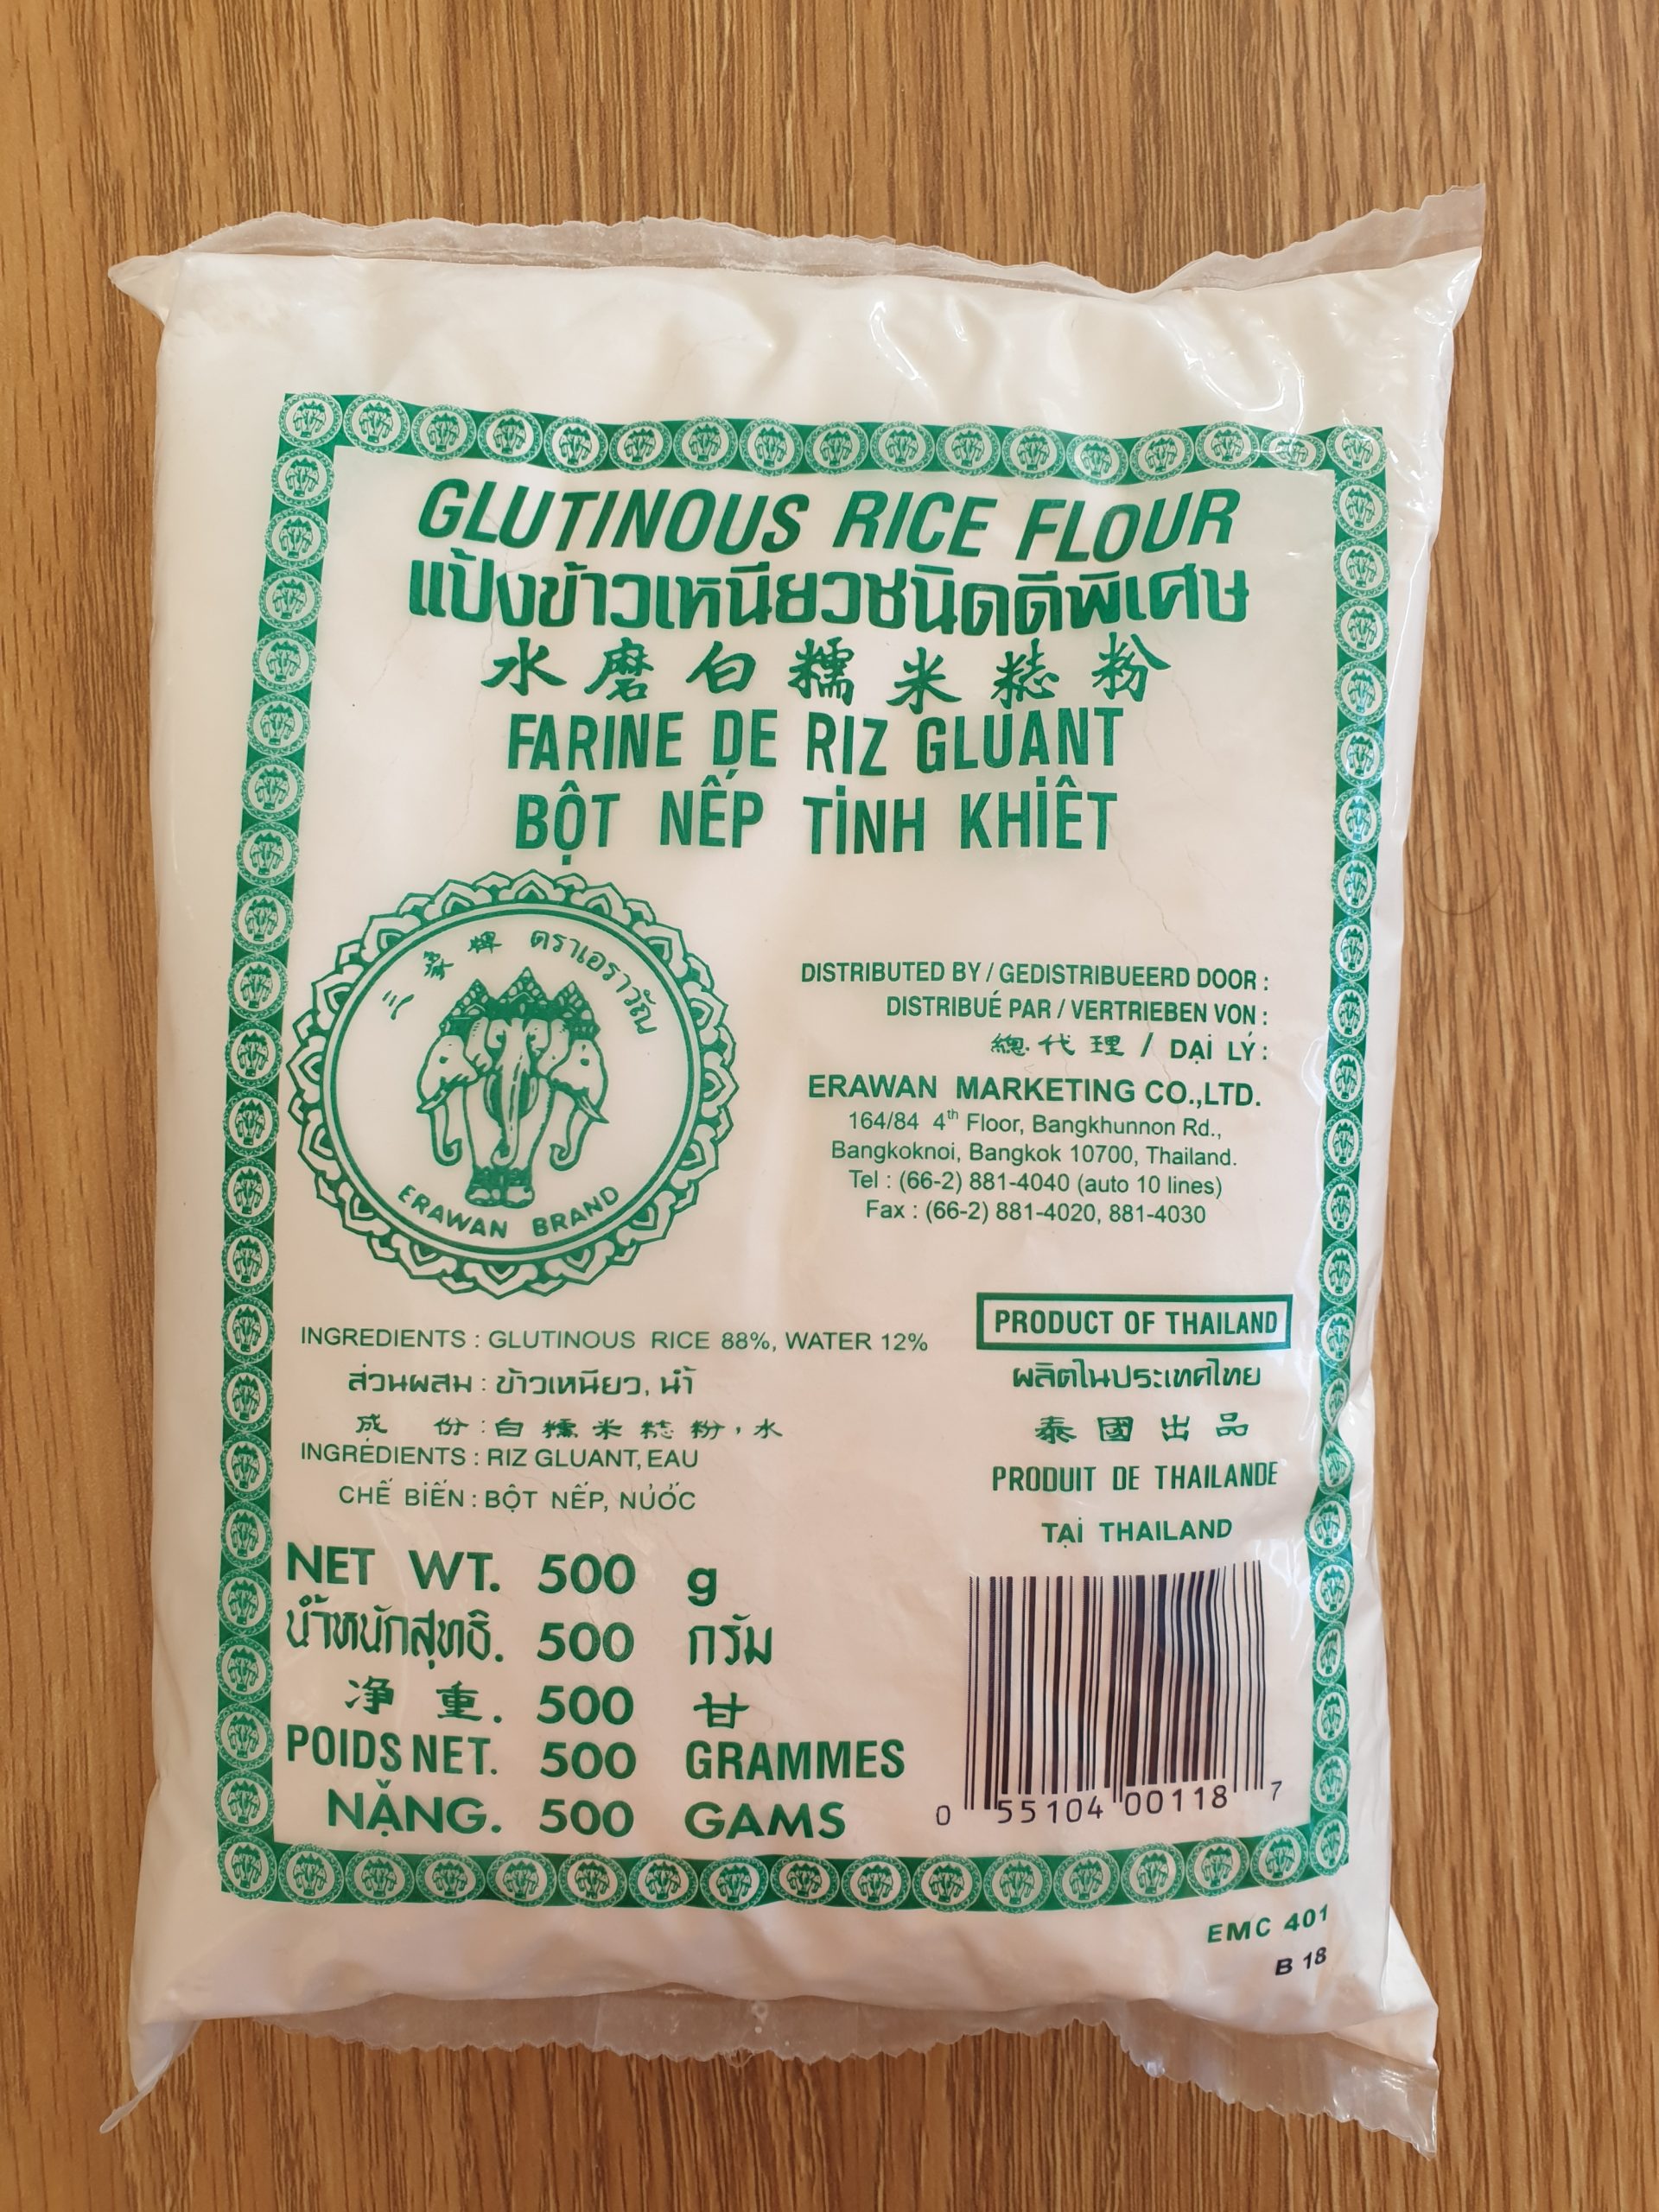 Glutinous rice flour packet